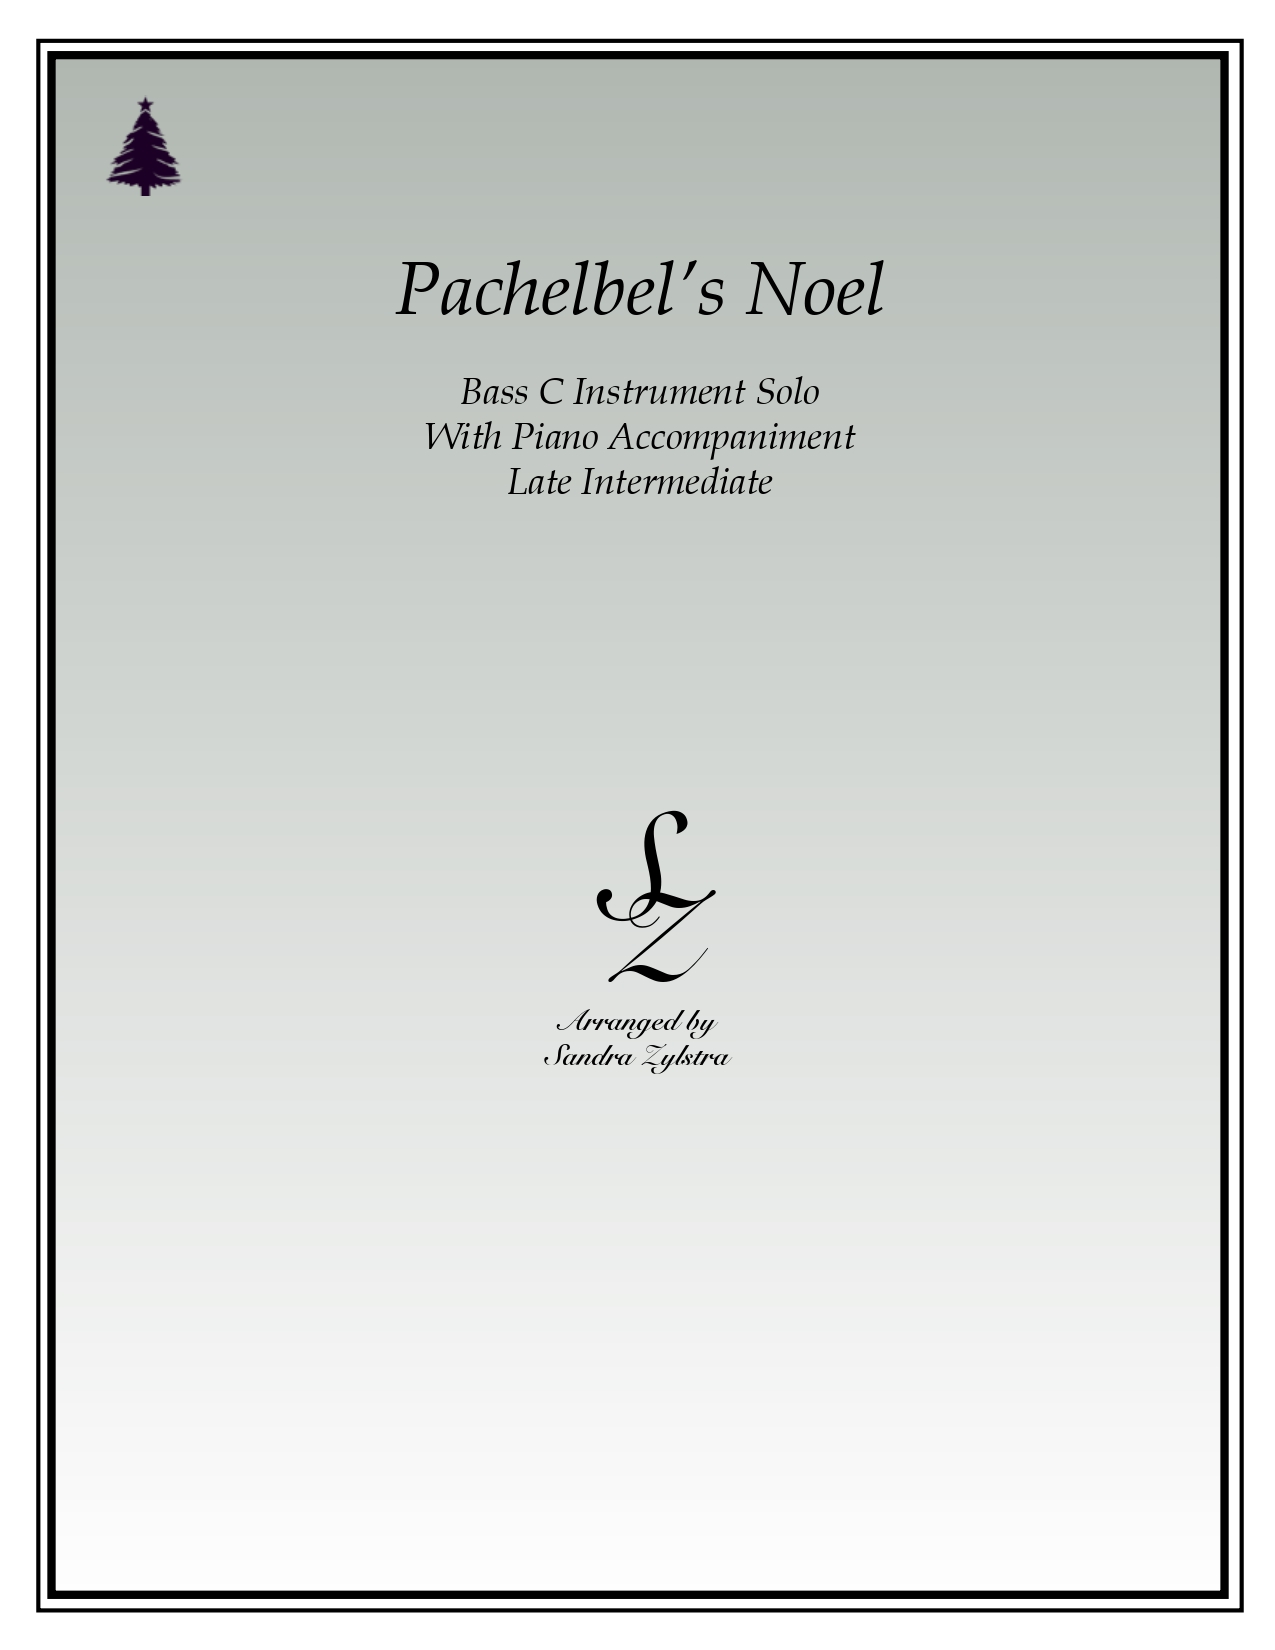 Pachelbels Noel bass C instrument solo part cover page 00011